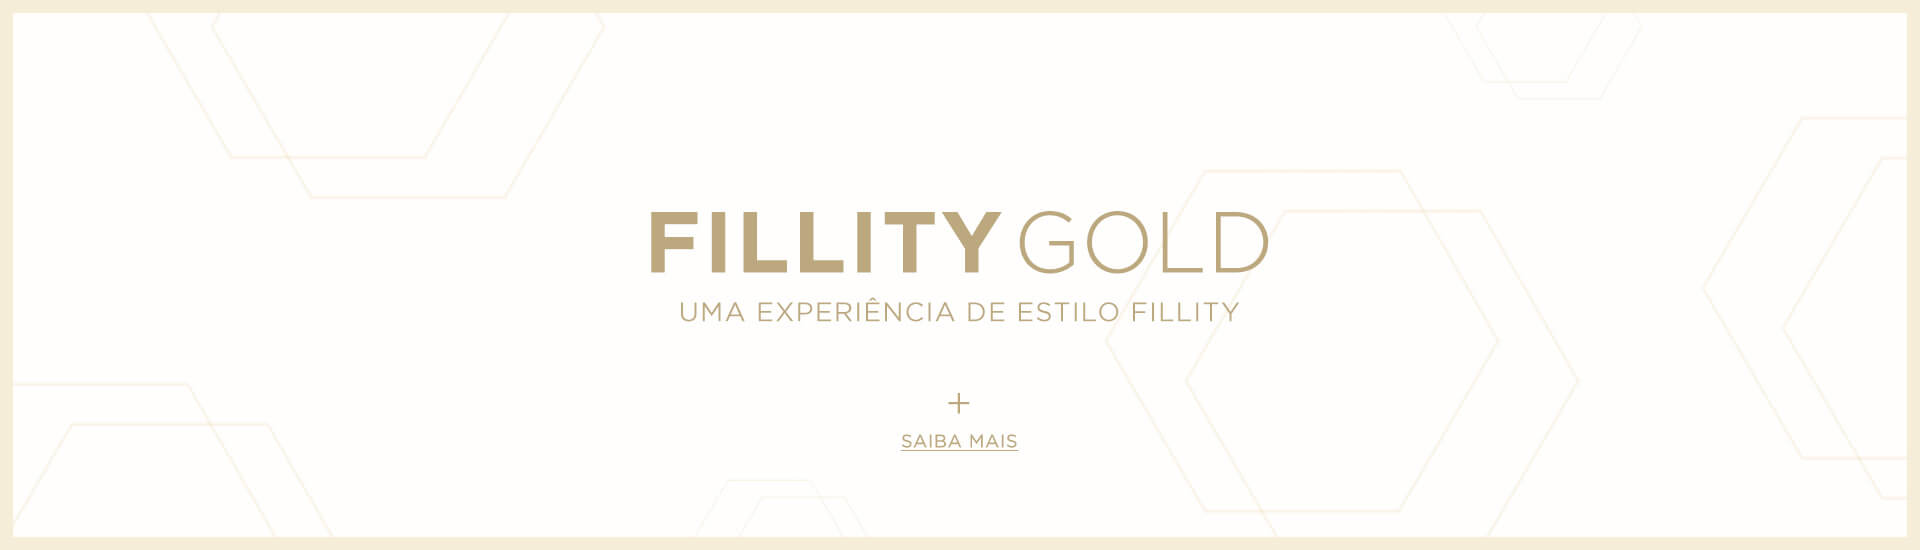 Fillity Gold